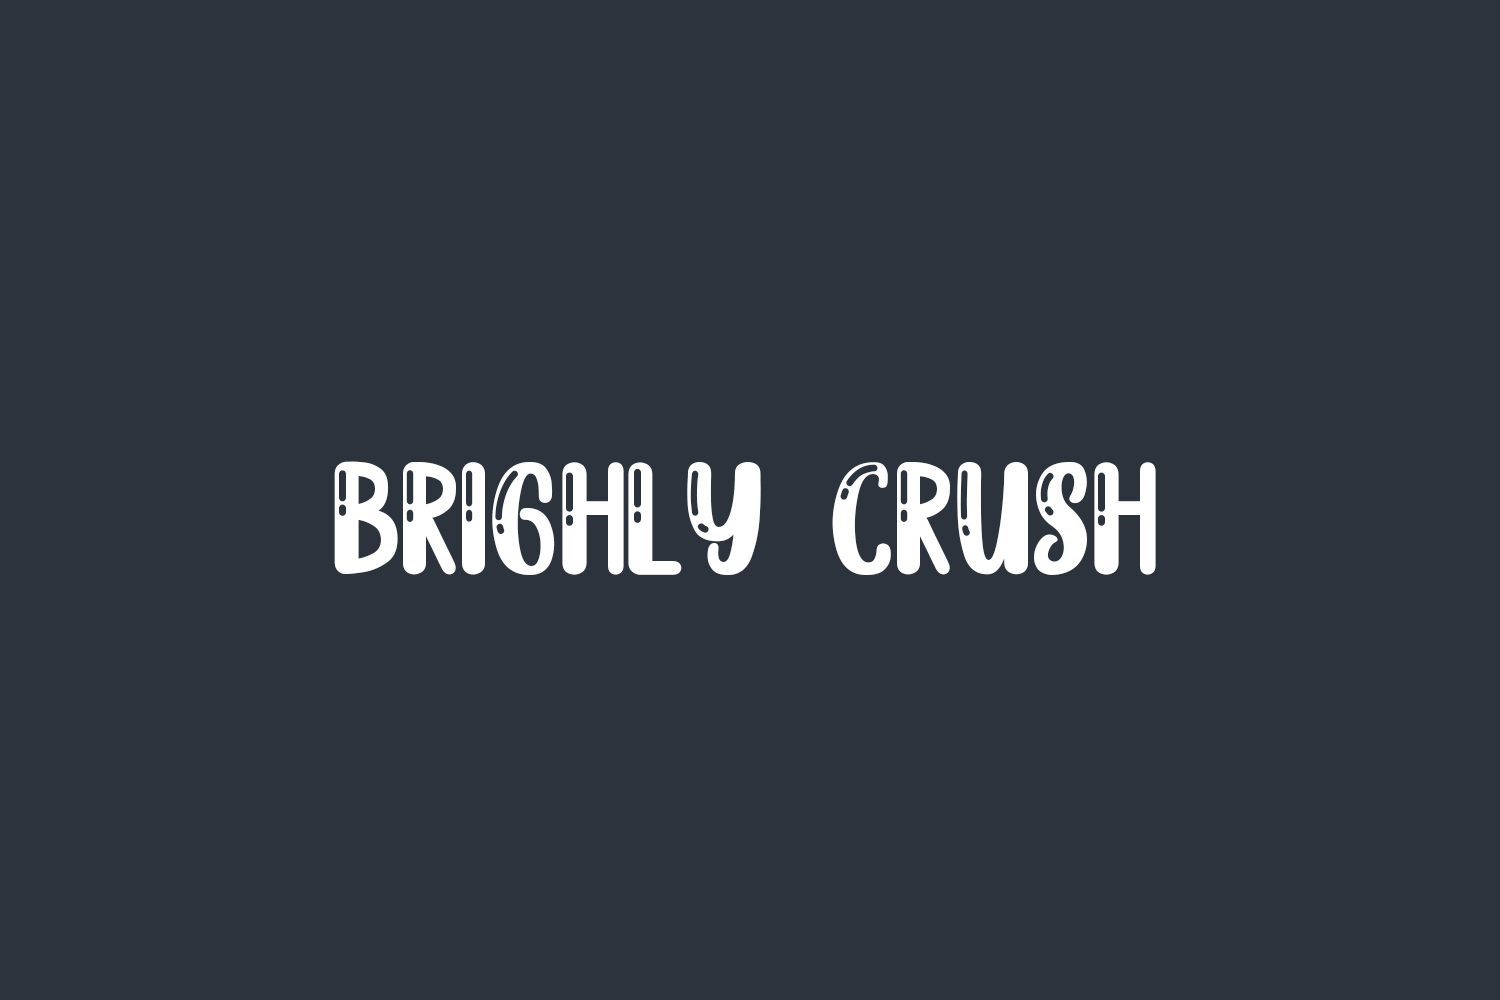 Brighly Crush